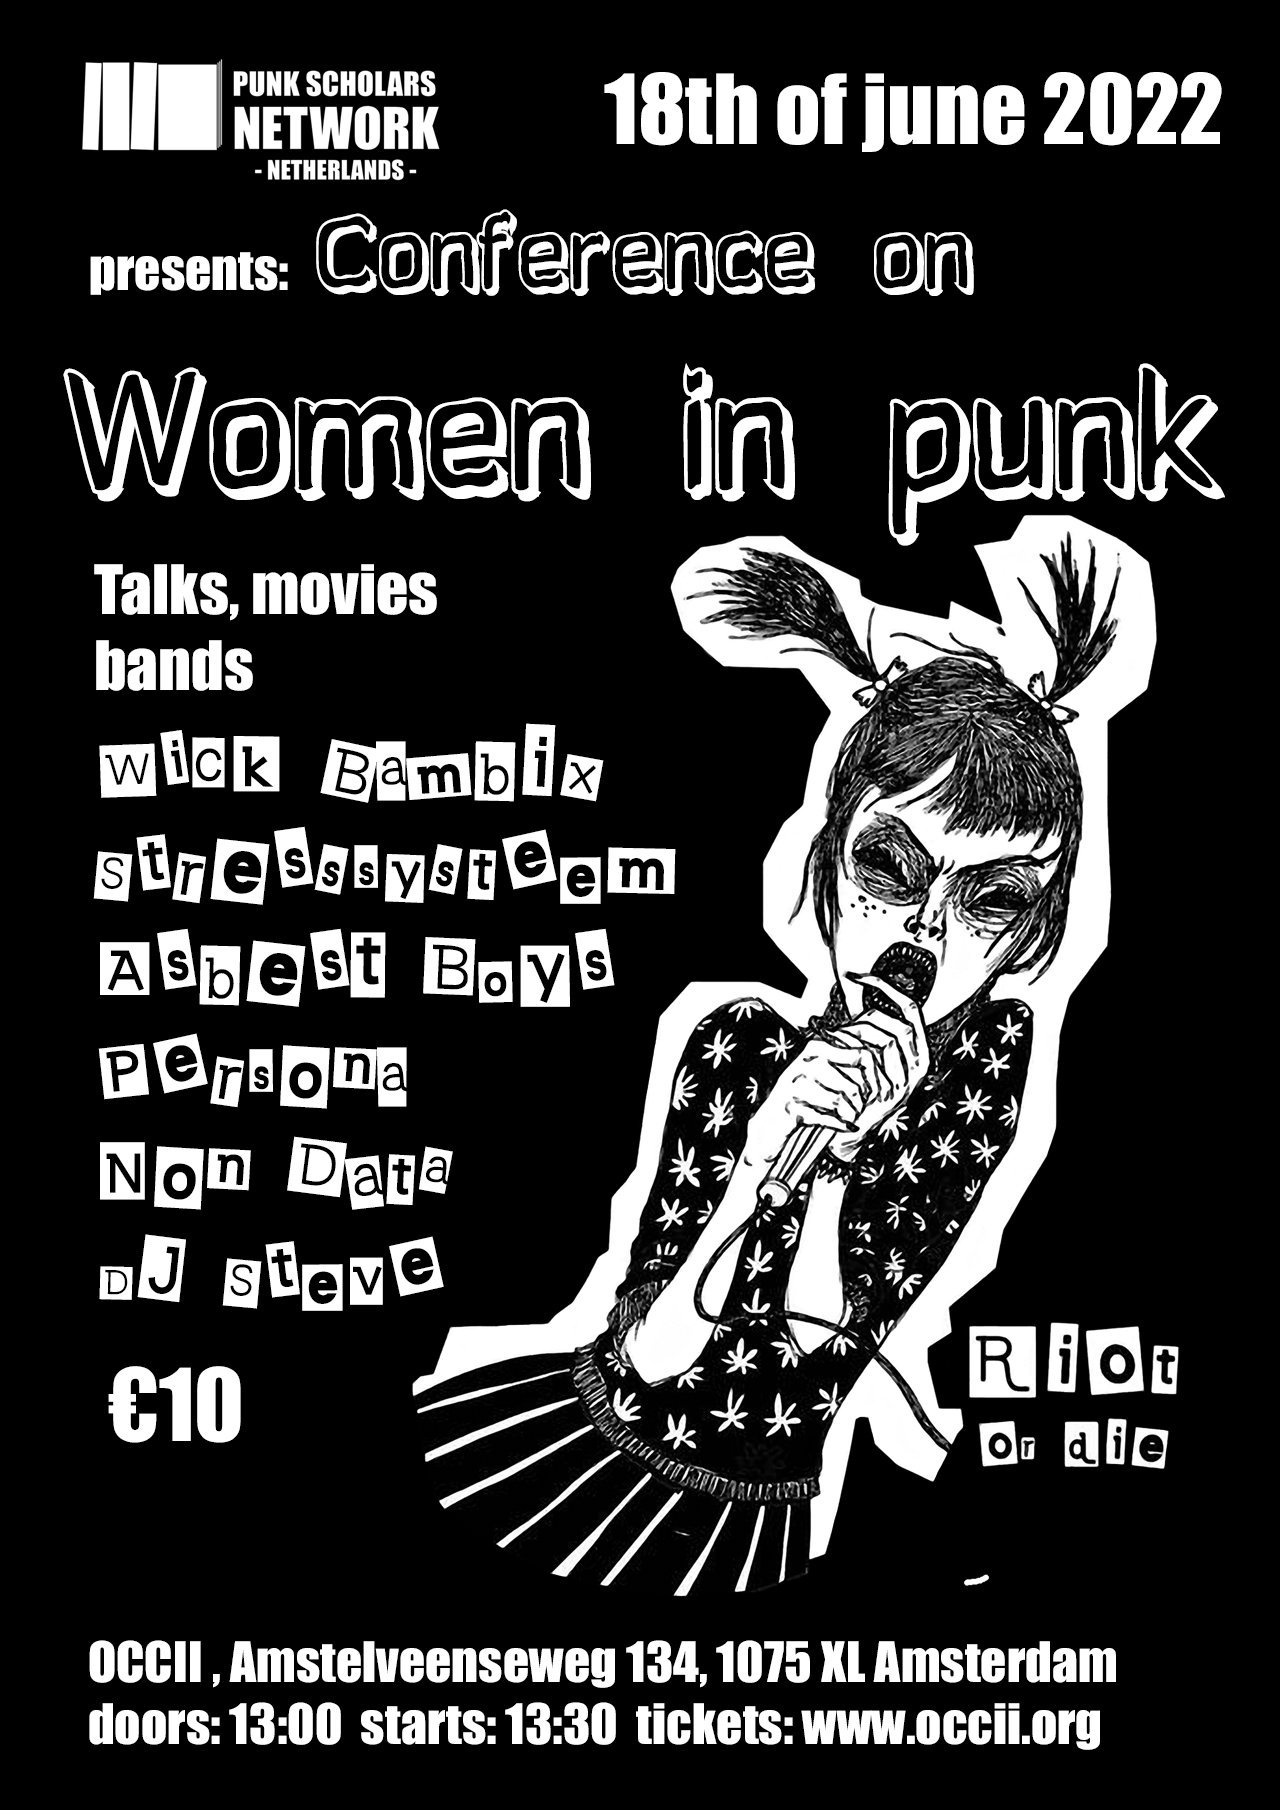 Conference: Women in Dutch punk W/ FiLM: Stories from the She-Punks (UK, 2018, Helen Reddington & Gina Birch) + PERSONA NON DATA + WICK BAMBIX + STRESSSYSTEM + ASBEST BOYS + DJ STEVE